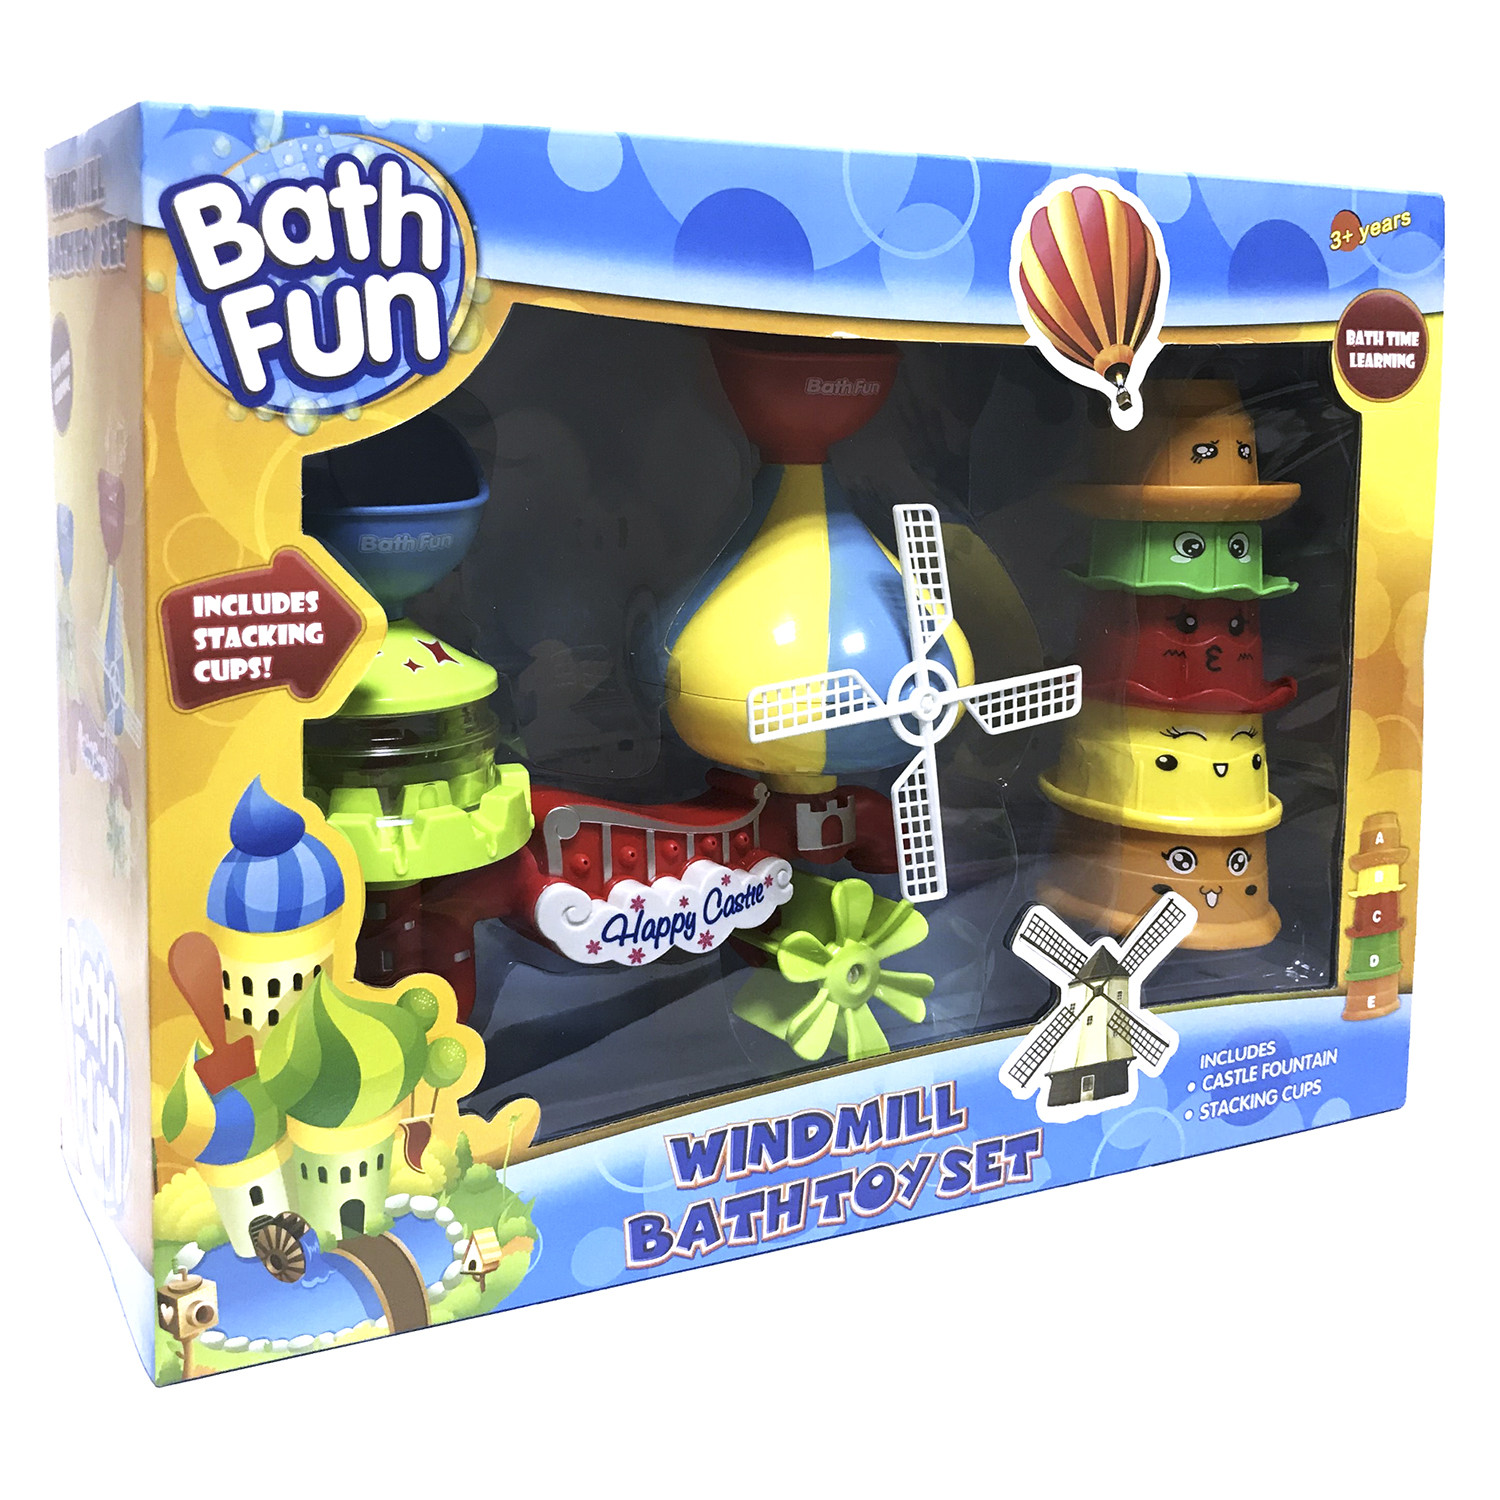 Windmill Bath Toy Set Image 1